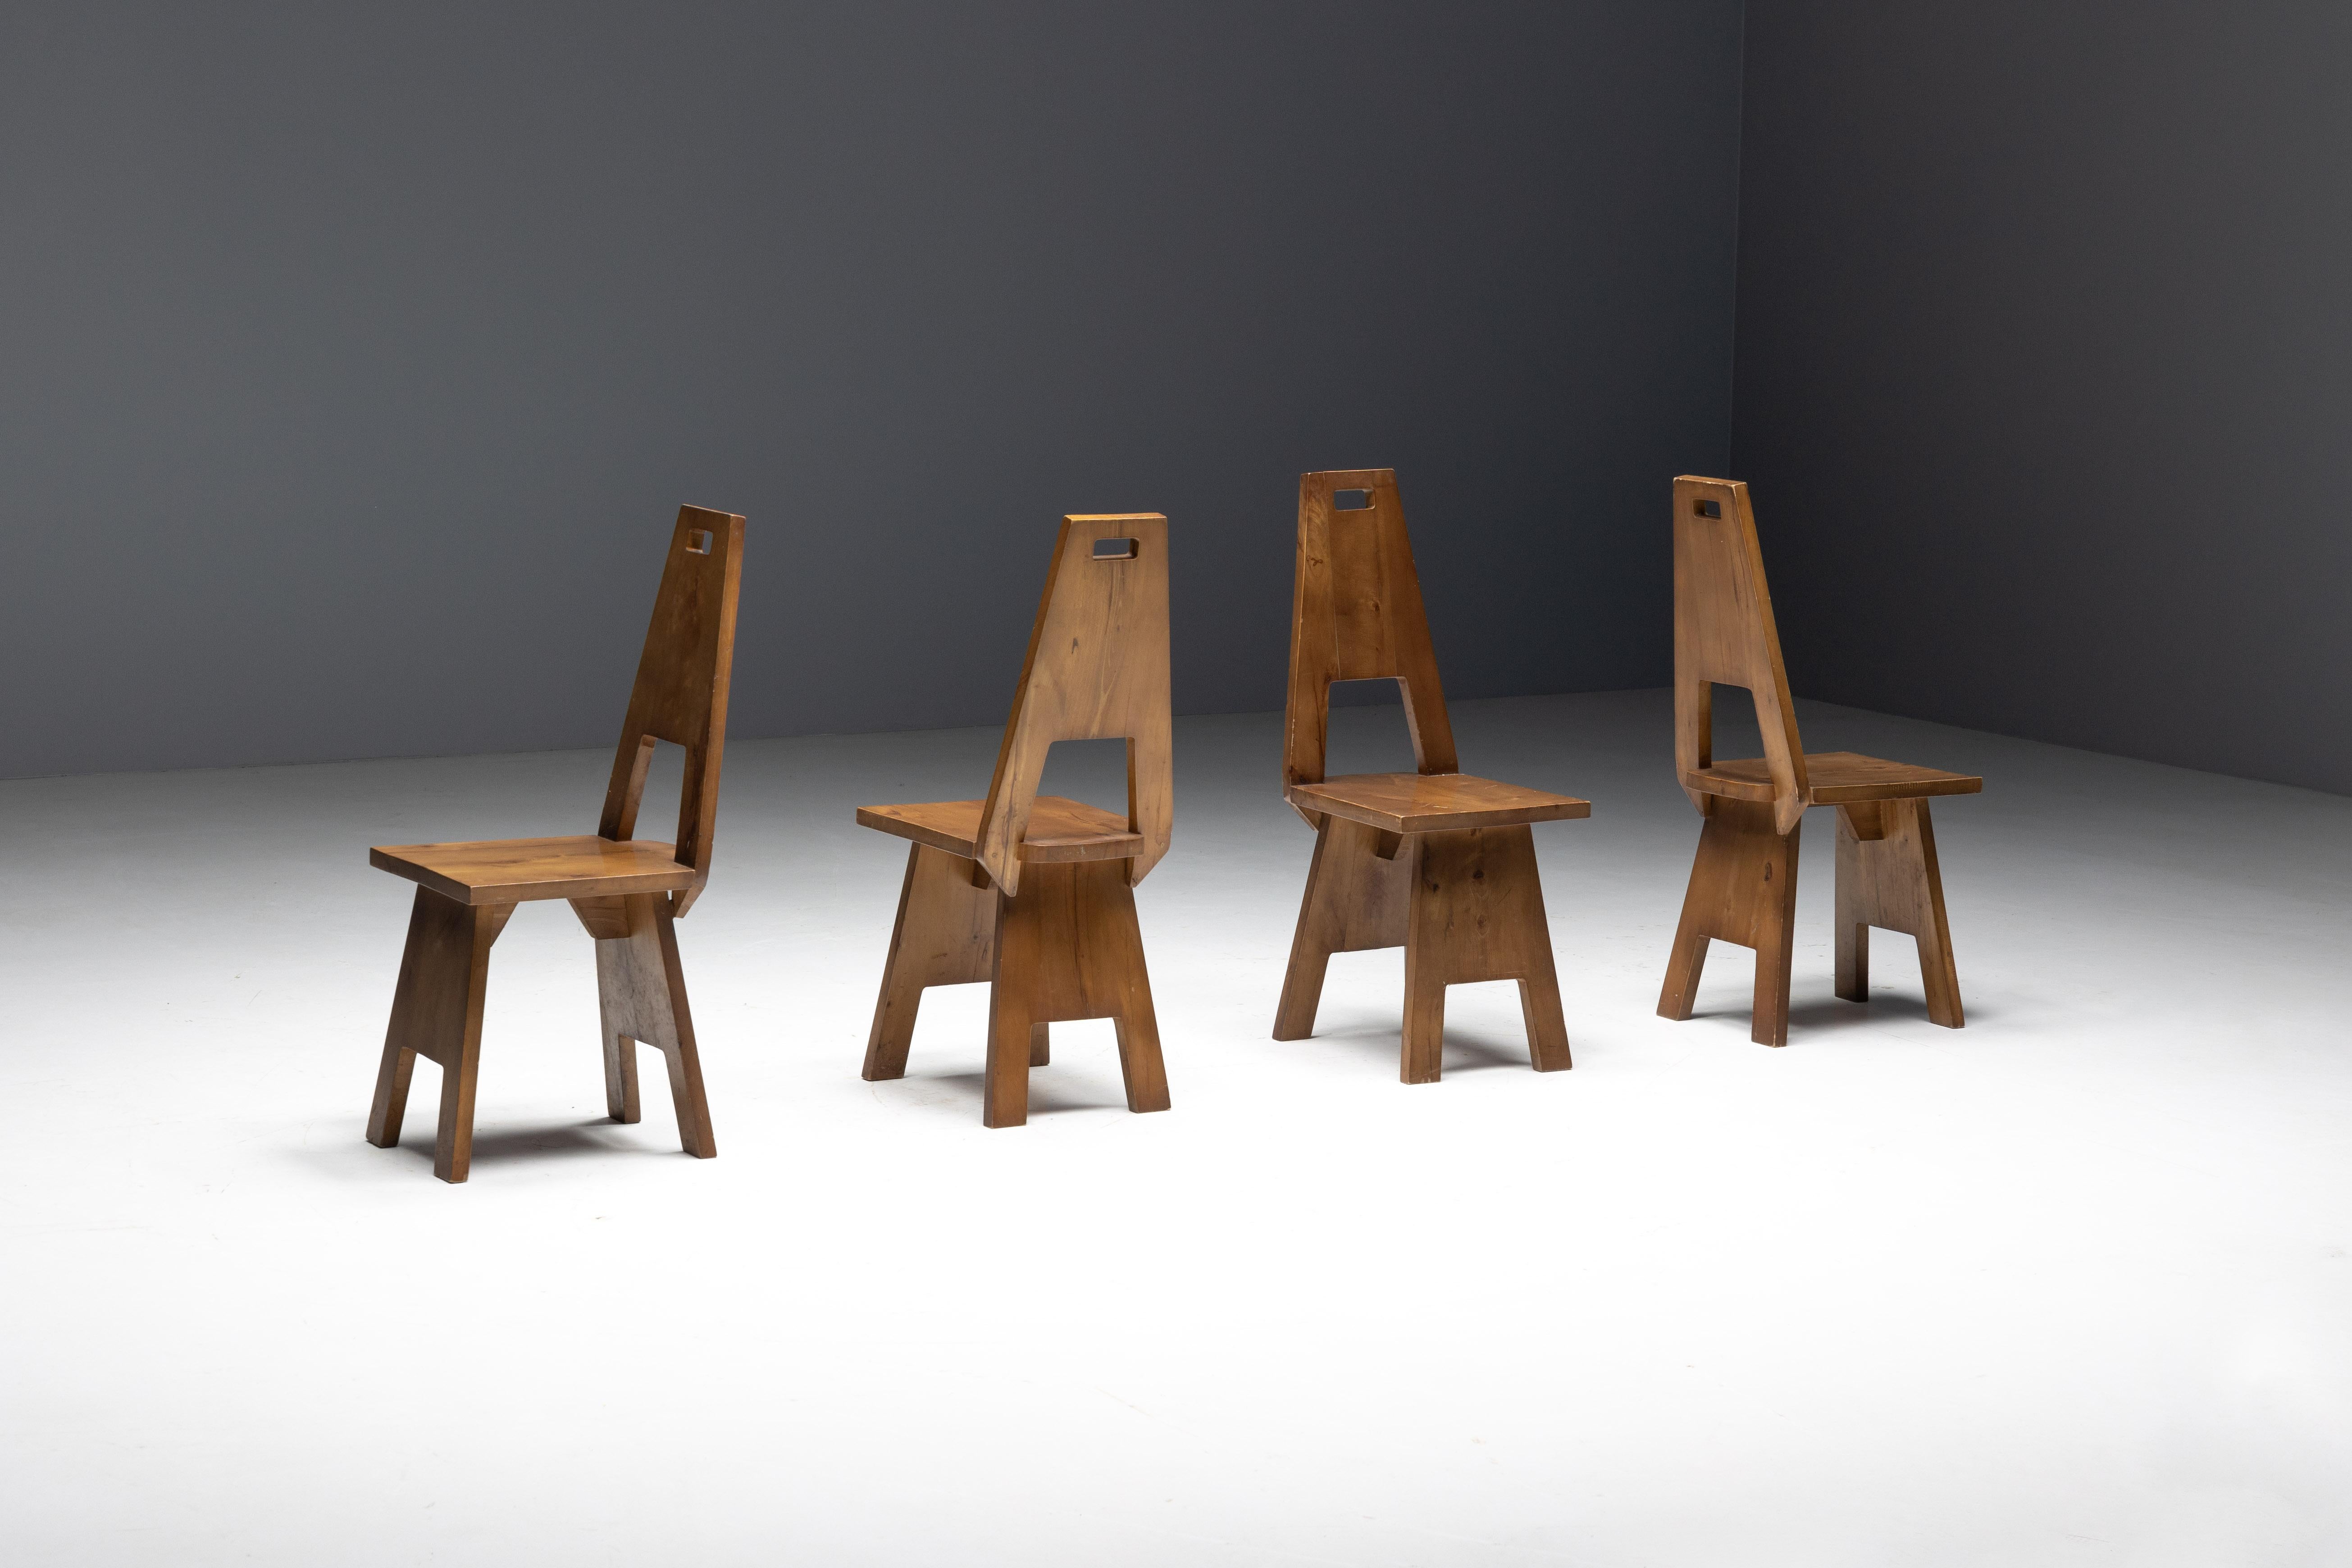 Sculptural Brutalist Wabi Sabi Chairs, Netherlands, 1960s For Sale 6